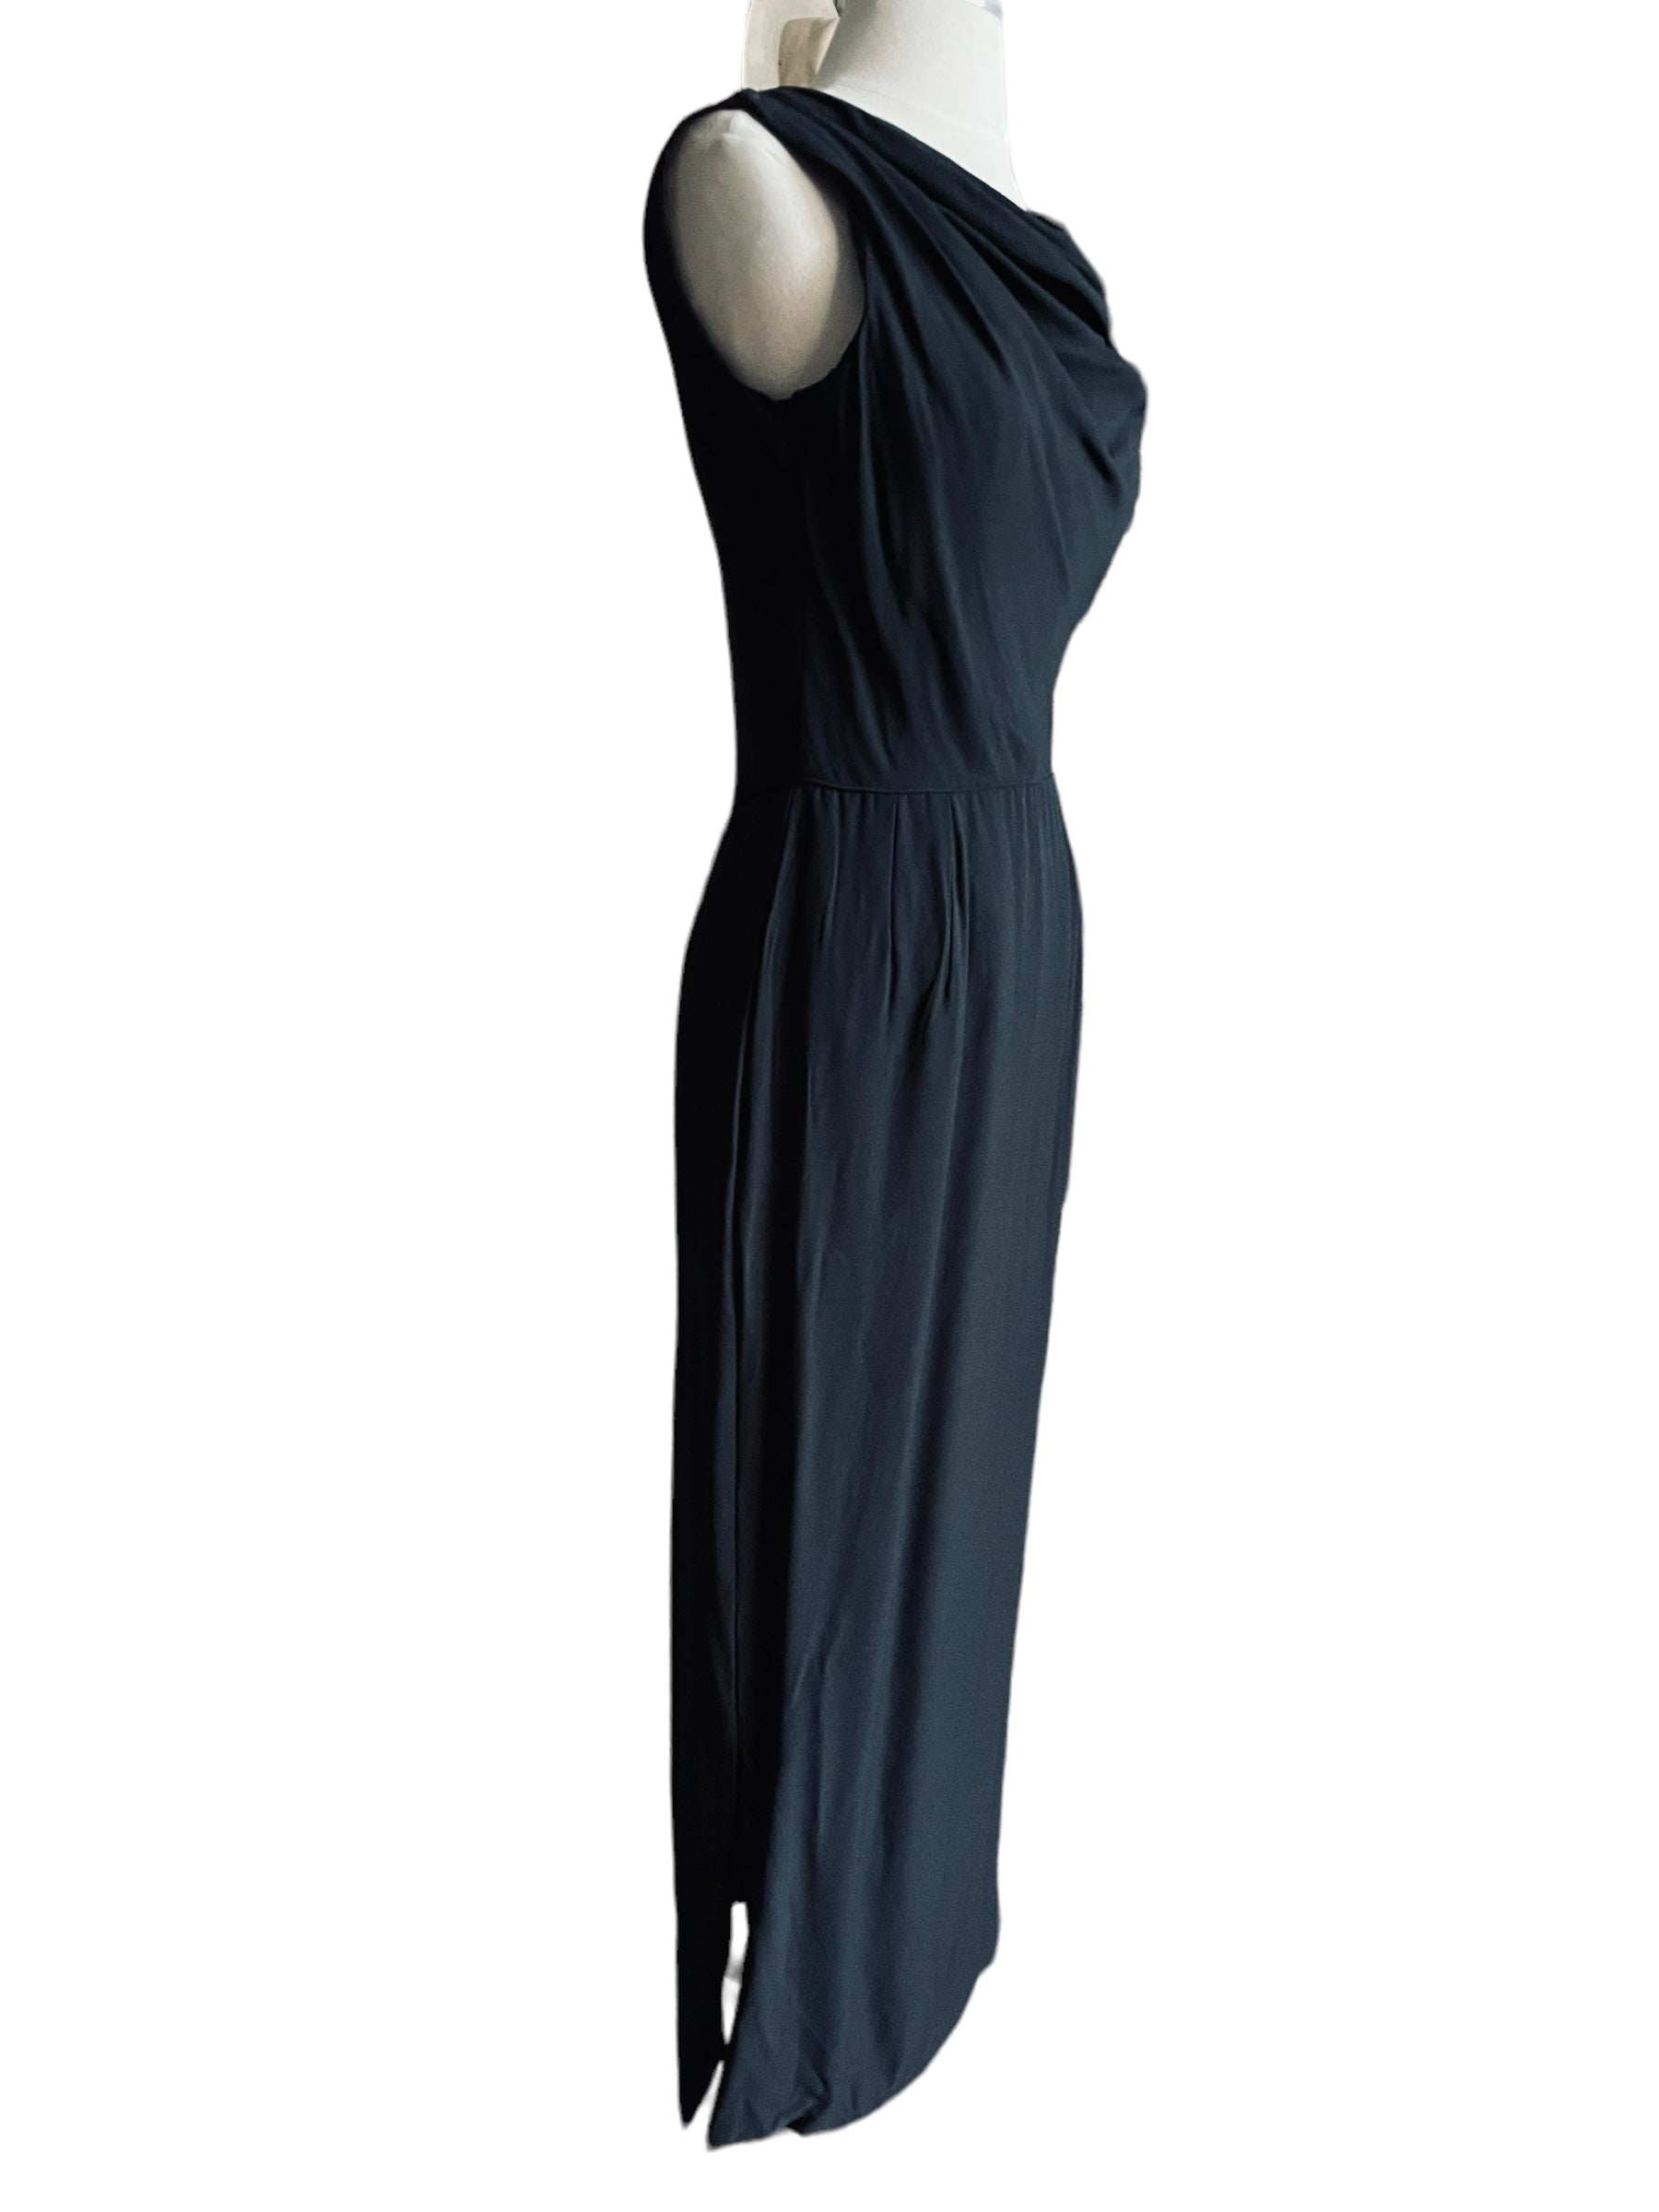 Full right side view of Vintage 1950s Alfred Werber Black Maxi Dress |  Barn Owl Vintage | Seattle Vintage Dresses